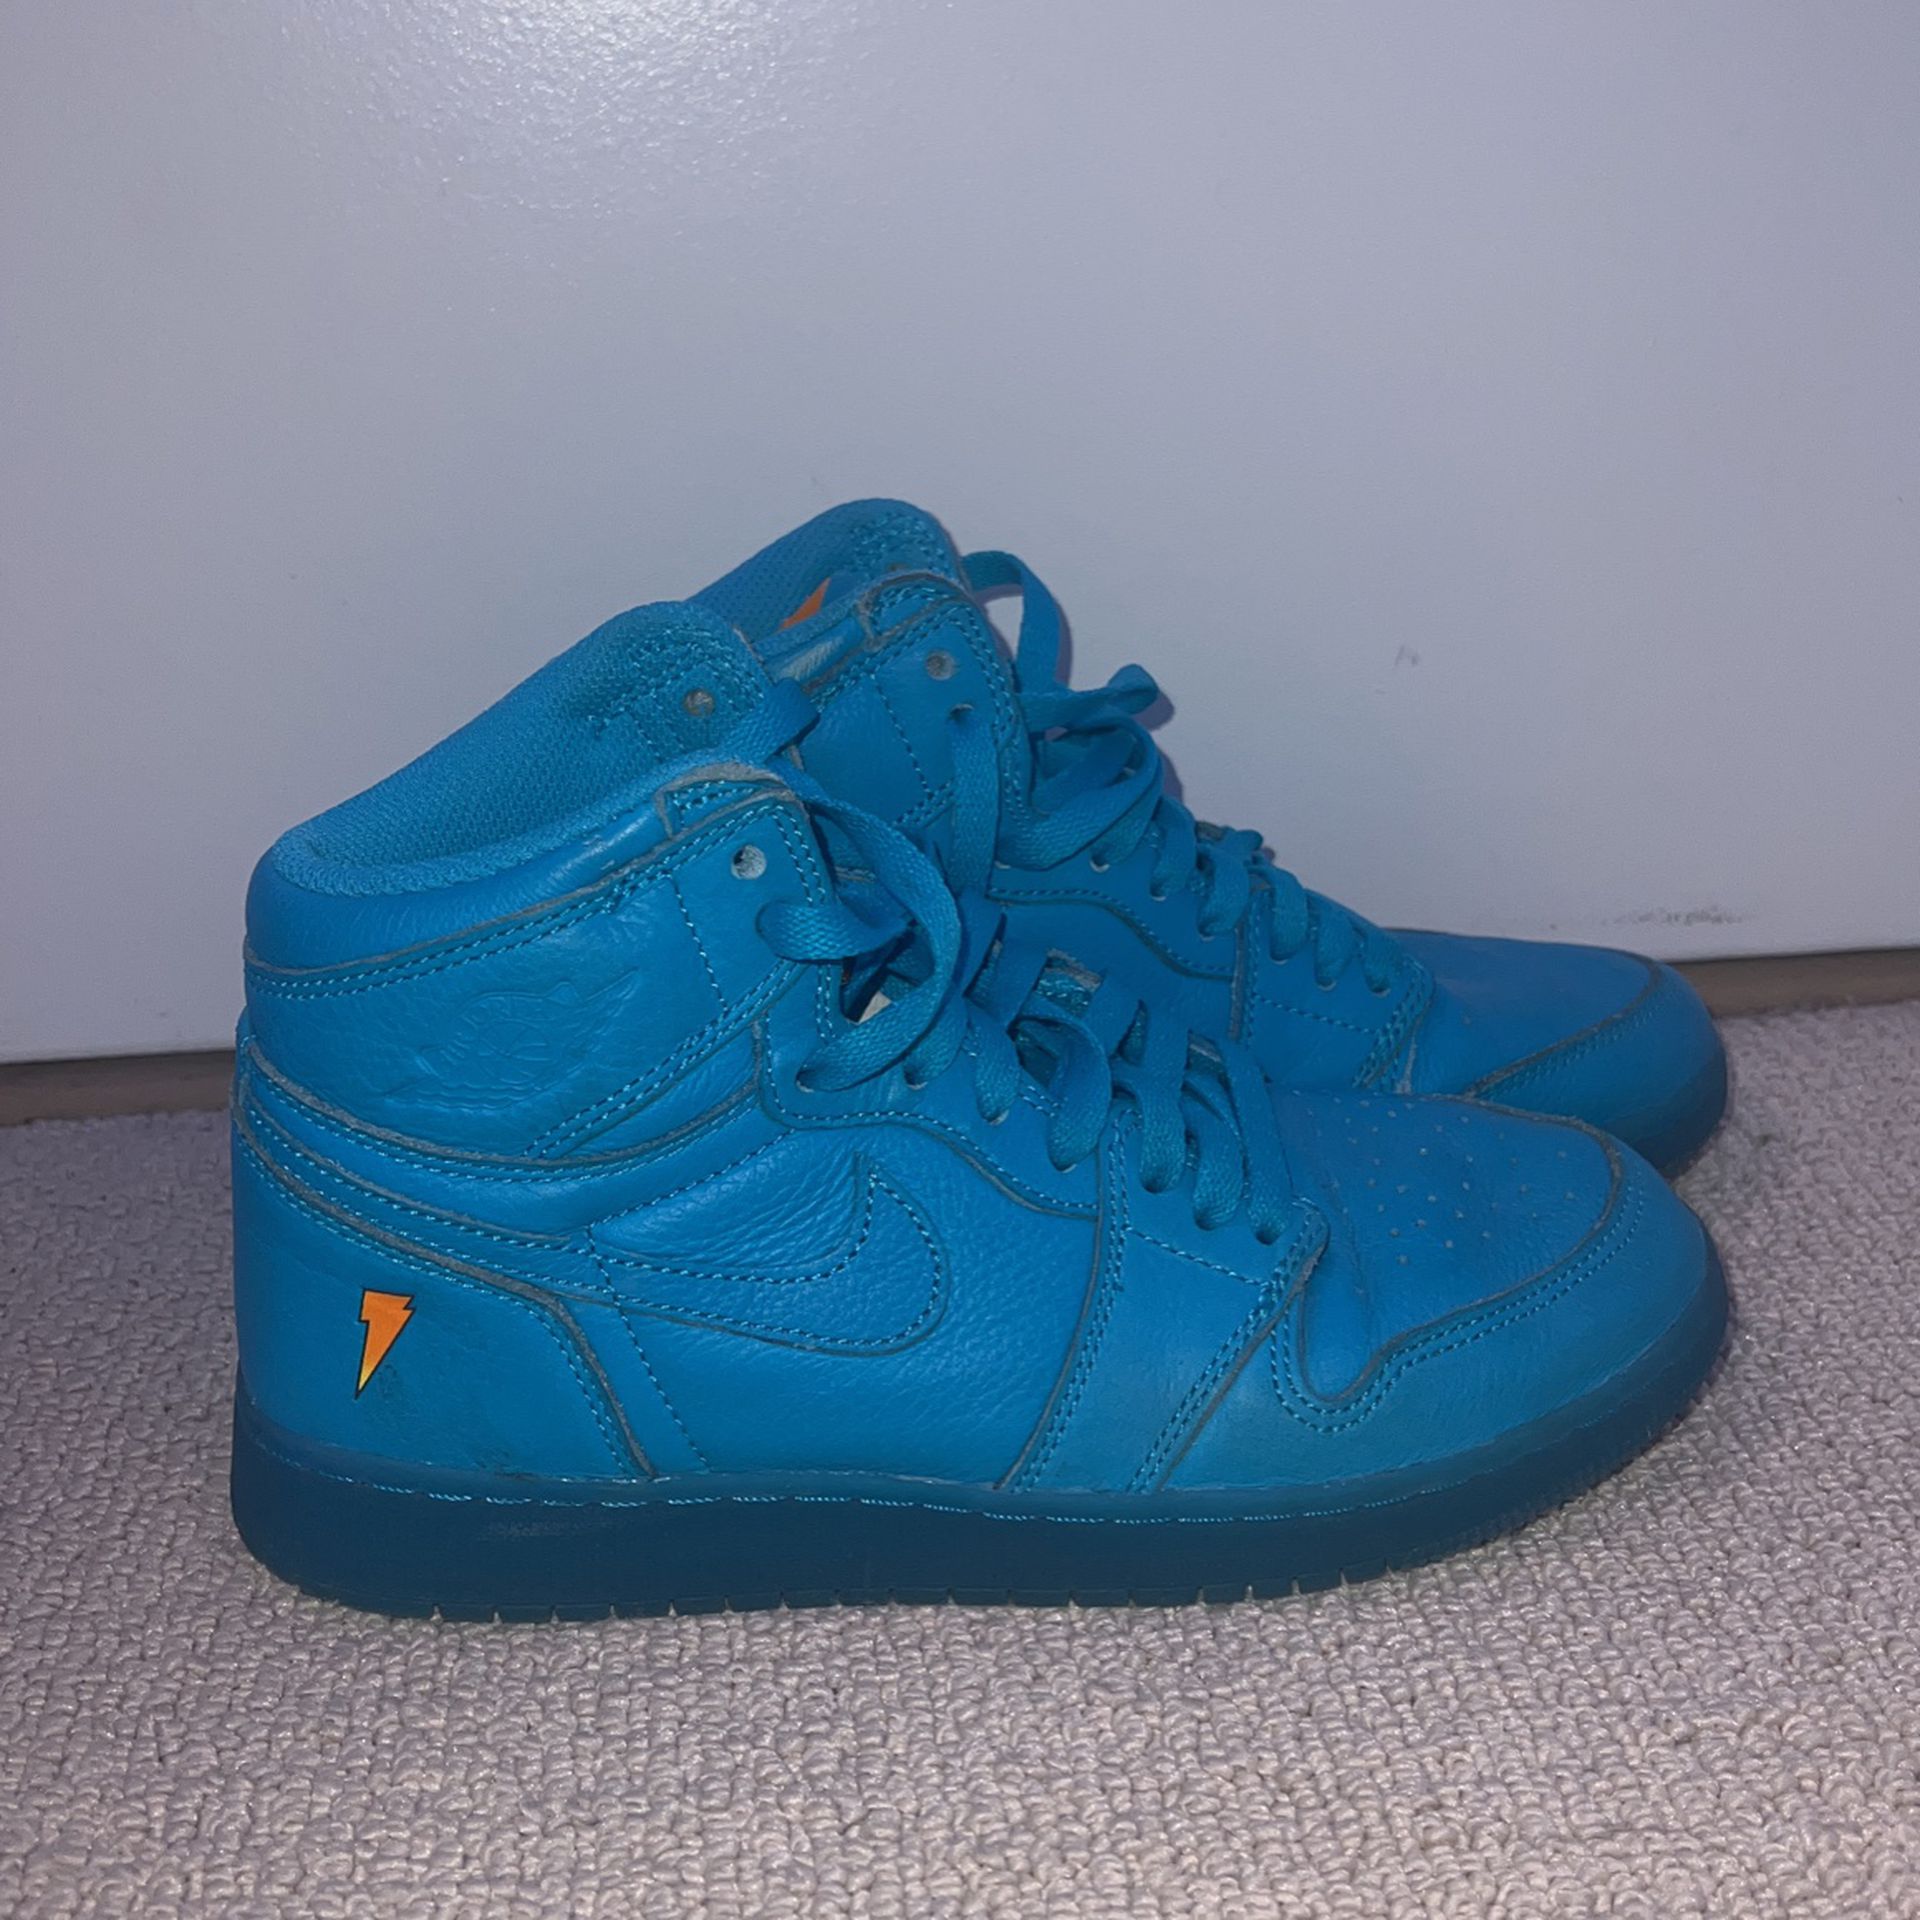 Jordan 1 Retro High Gatorade Blue Lagoon Shoes 6.5 Y for Sale in